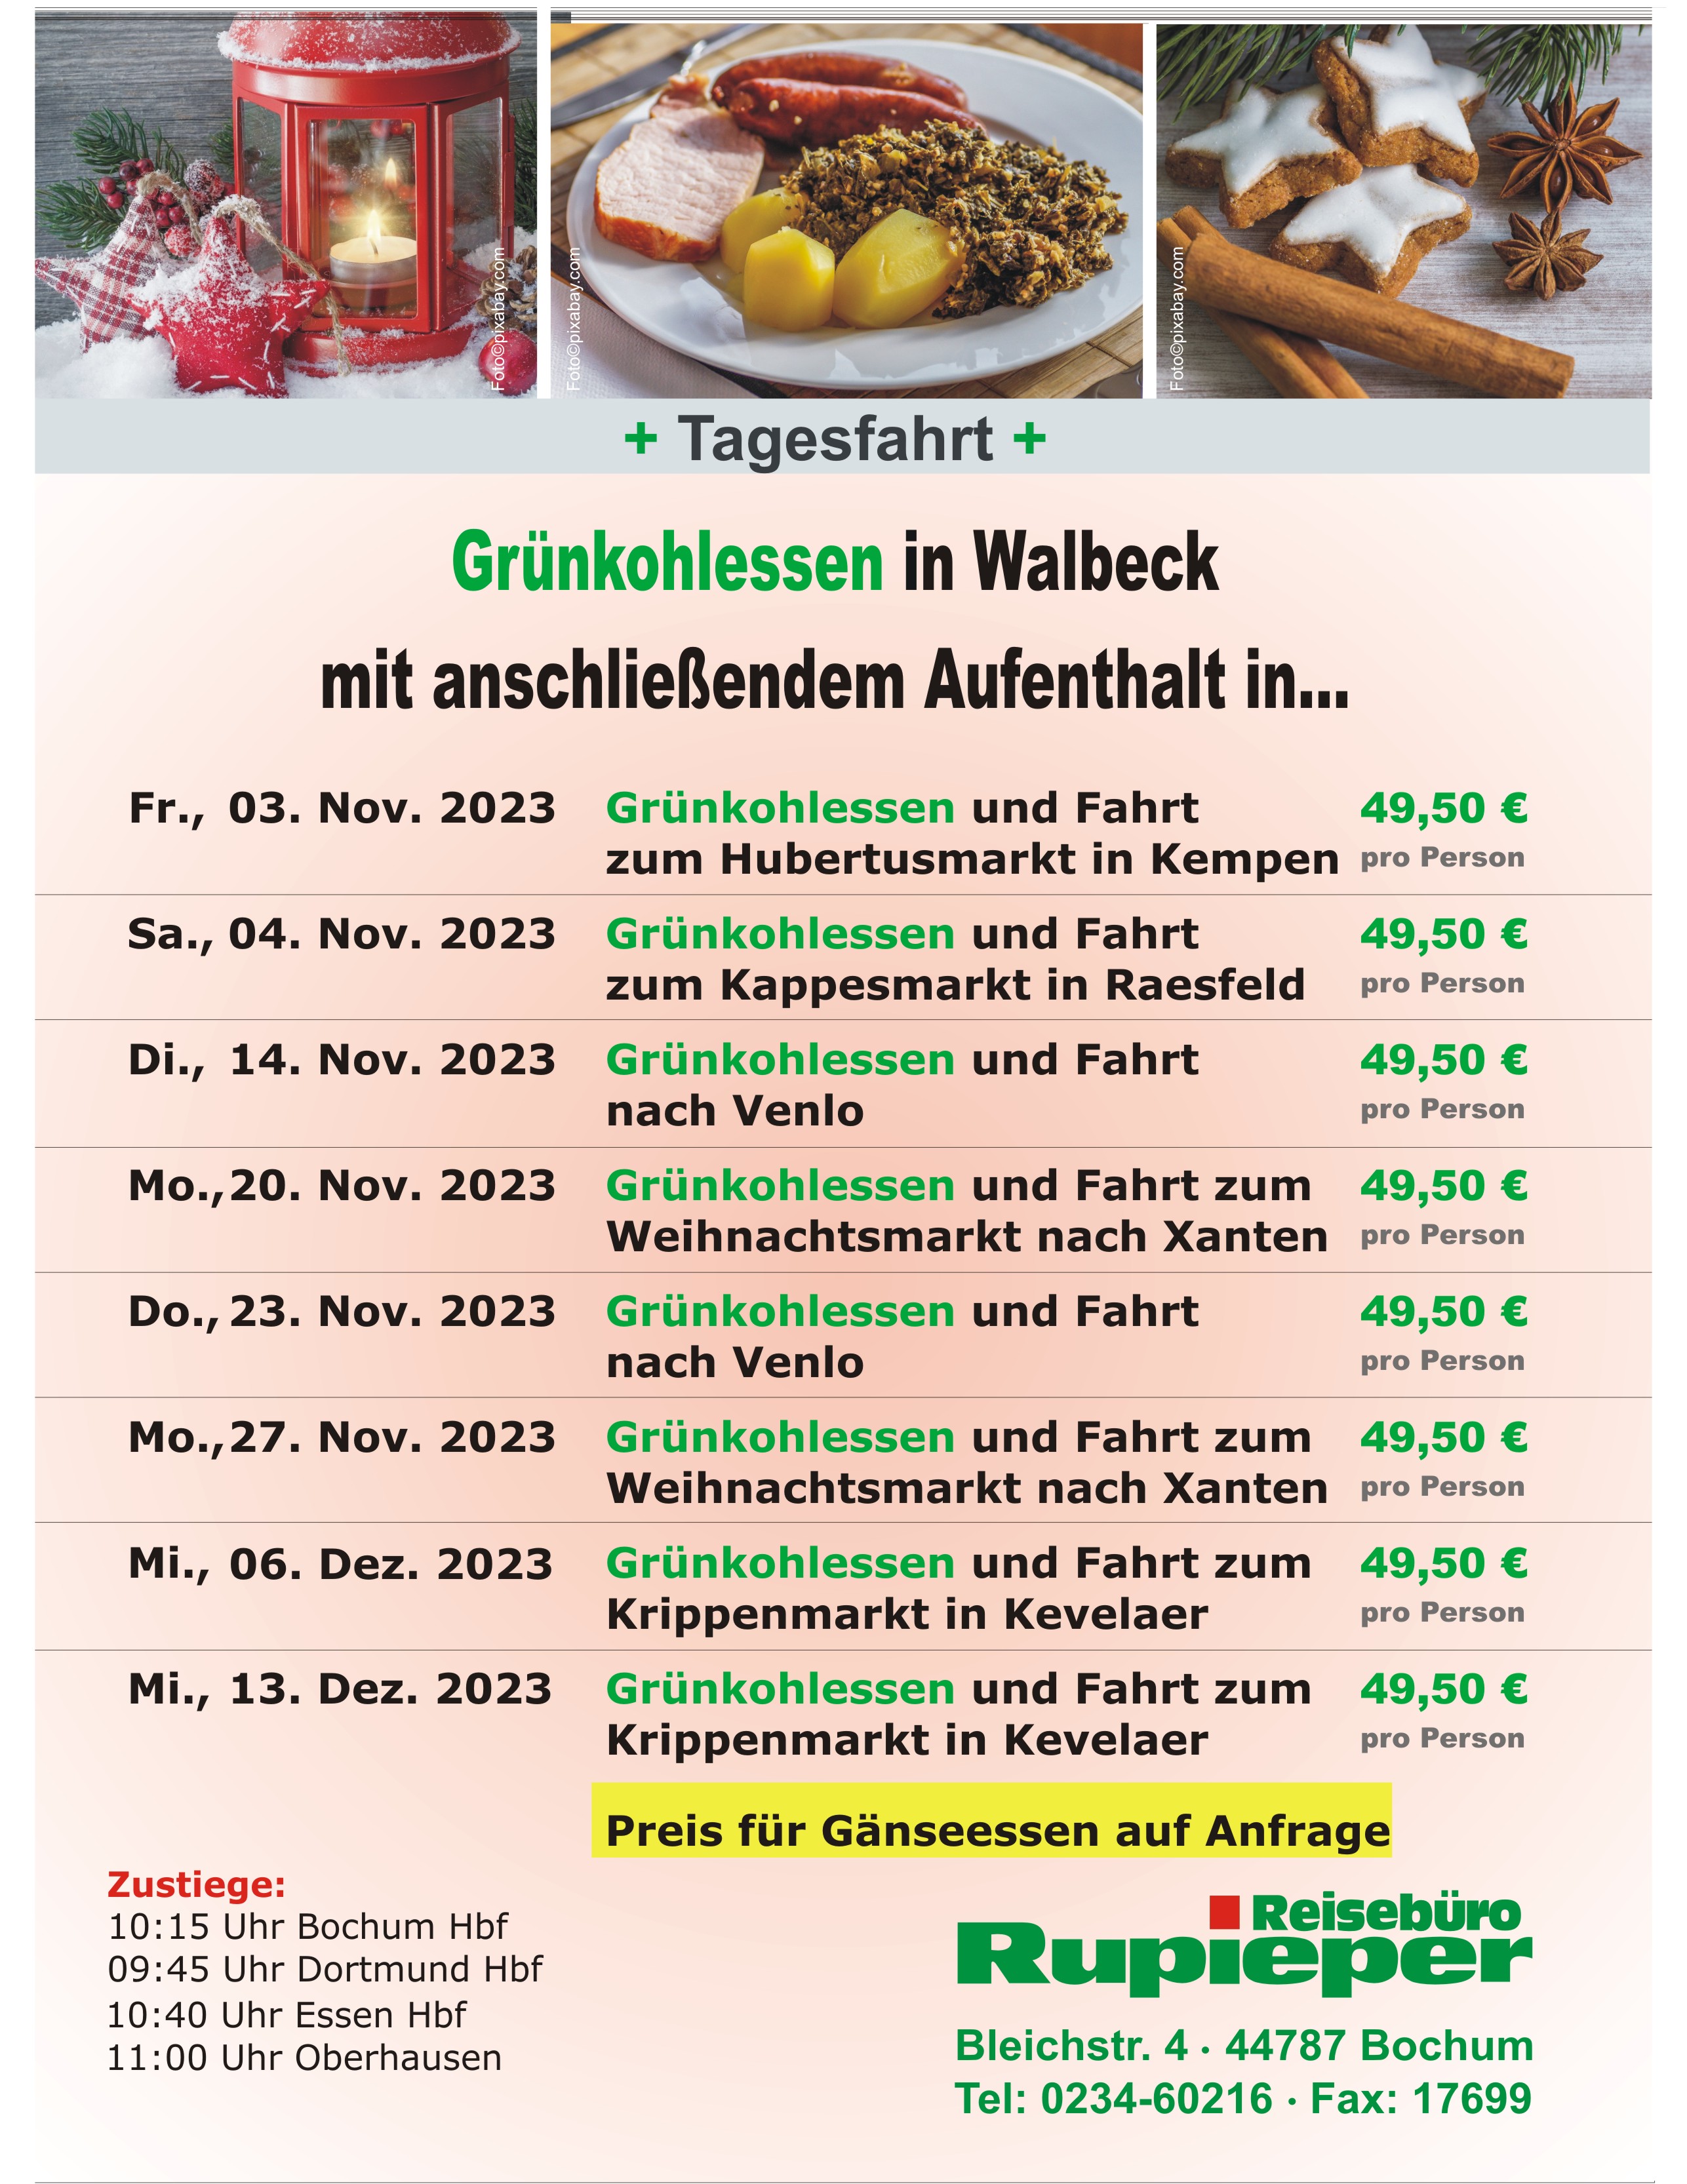 Grünkohl_Walbeck